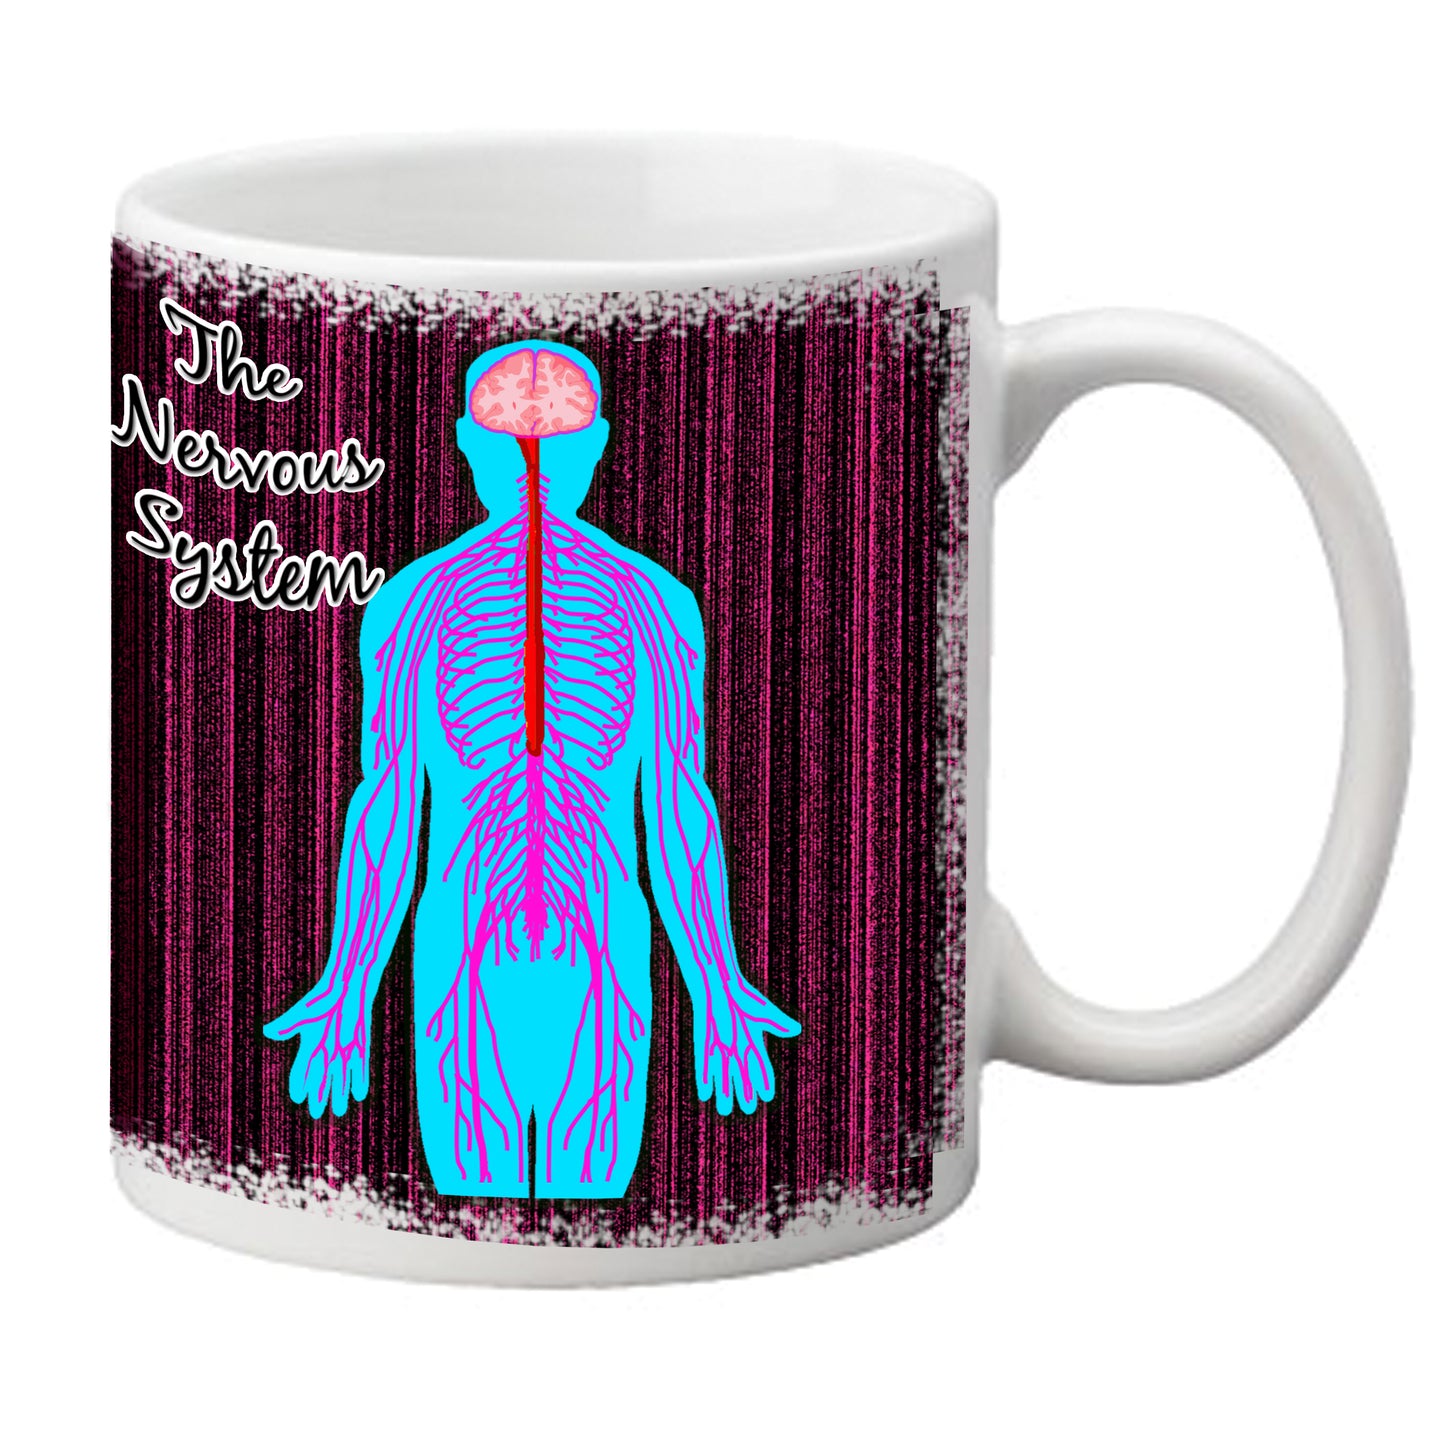 'The Nervous System' Mug